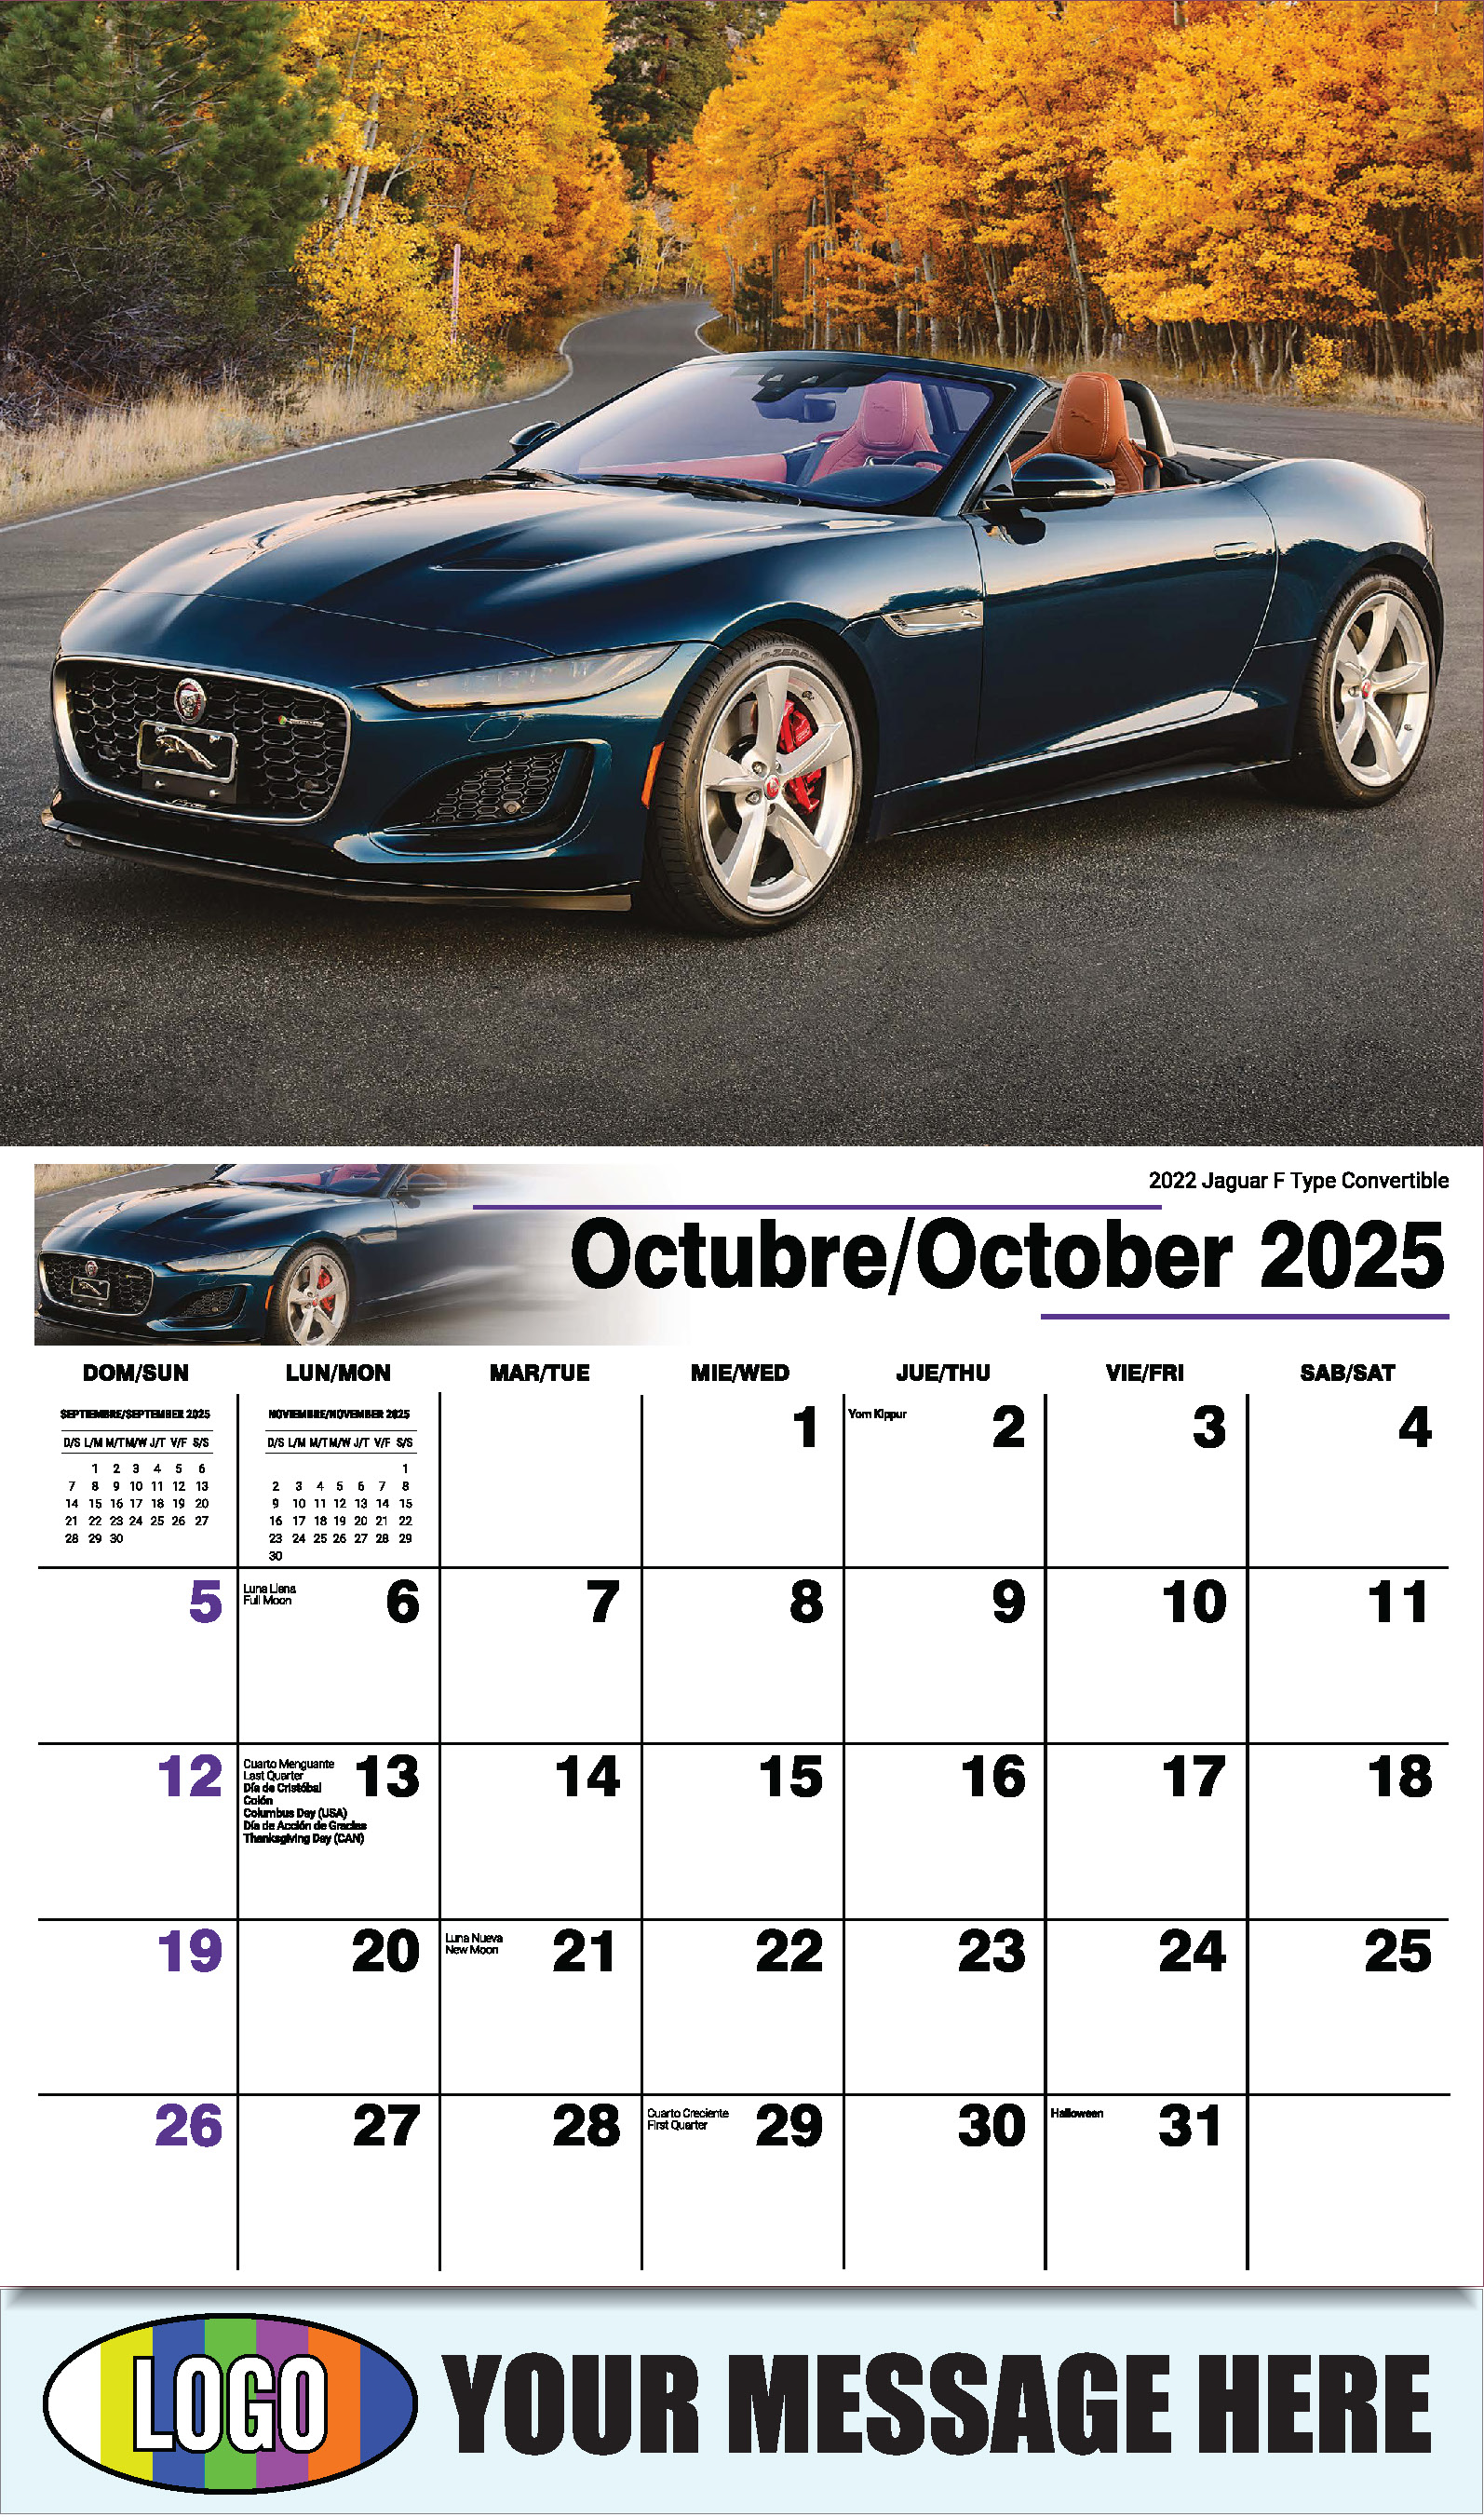 Exotic Cars 2025 Bilingual Automotive Business Promotional Calendar - October